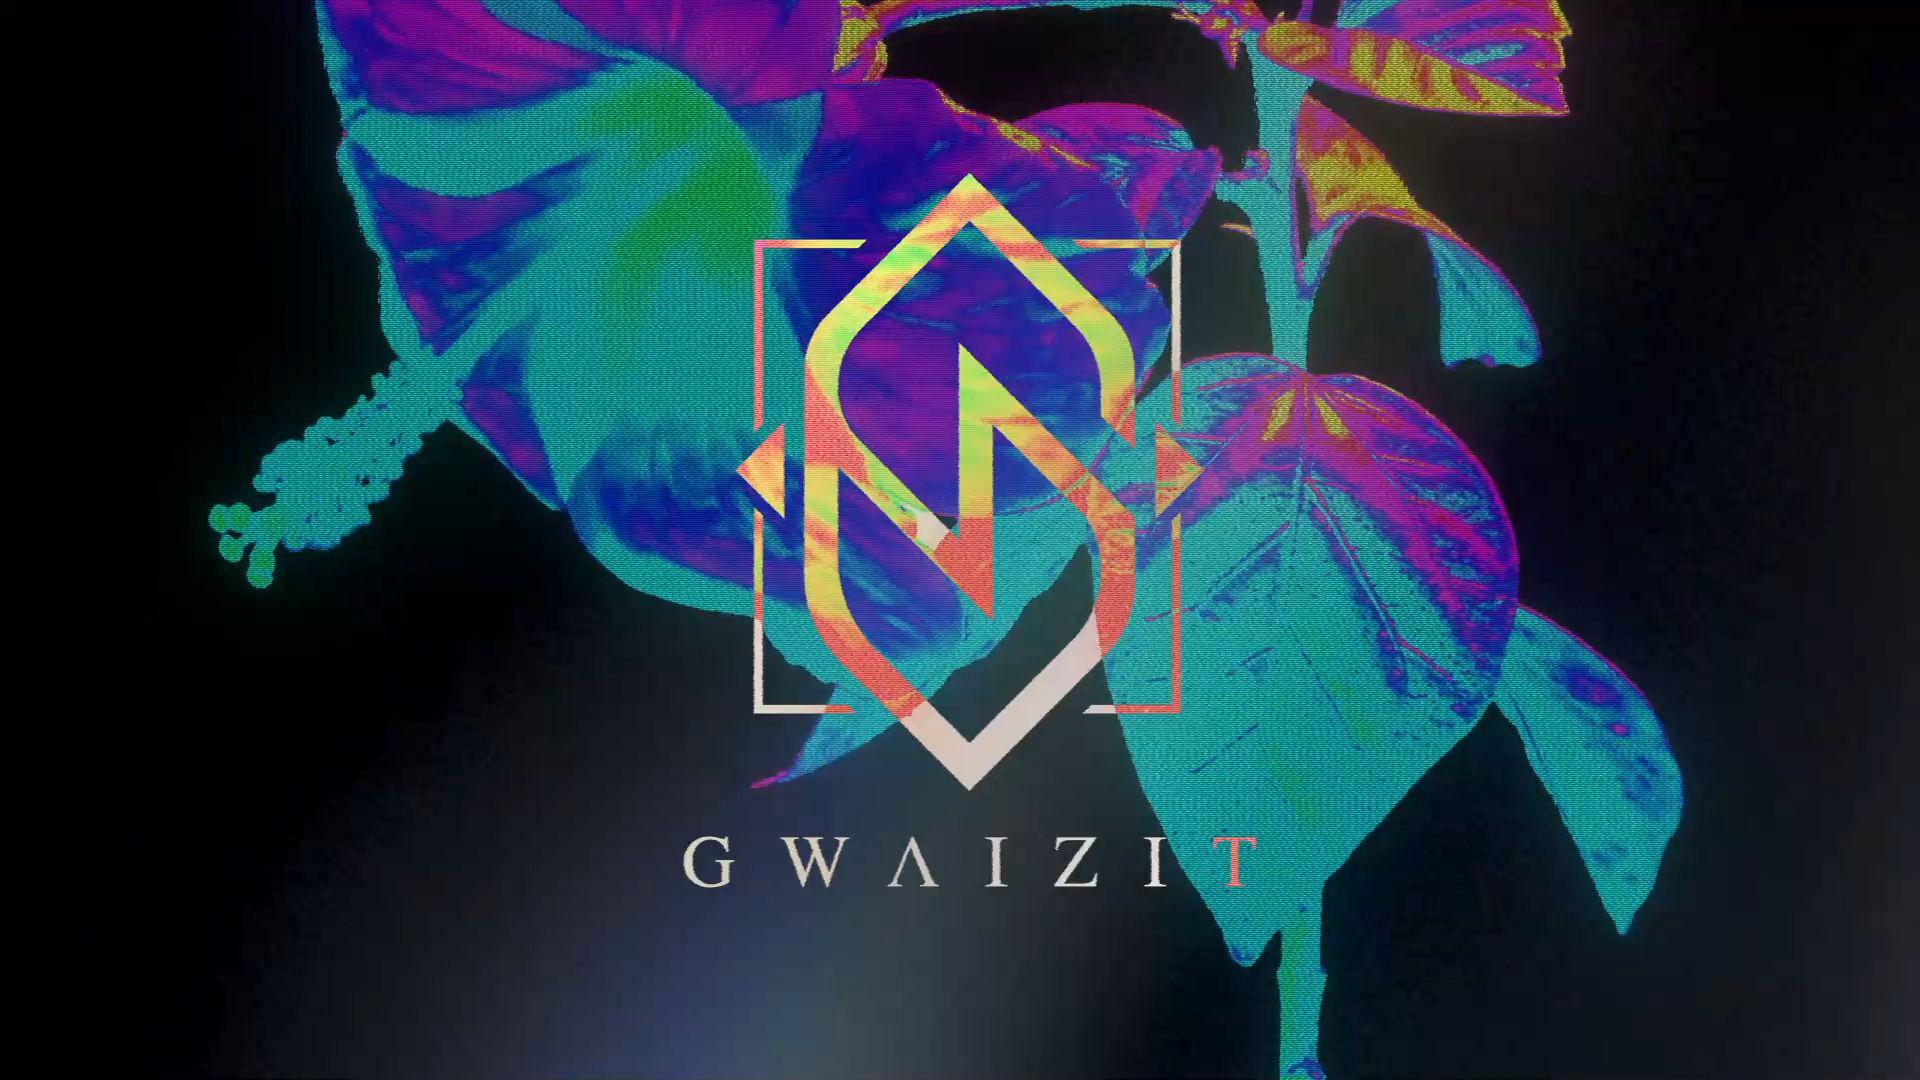 鬼节GwaiZit - GWAIZIT - LION